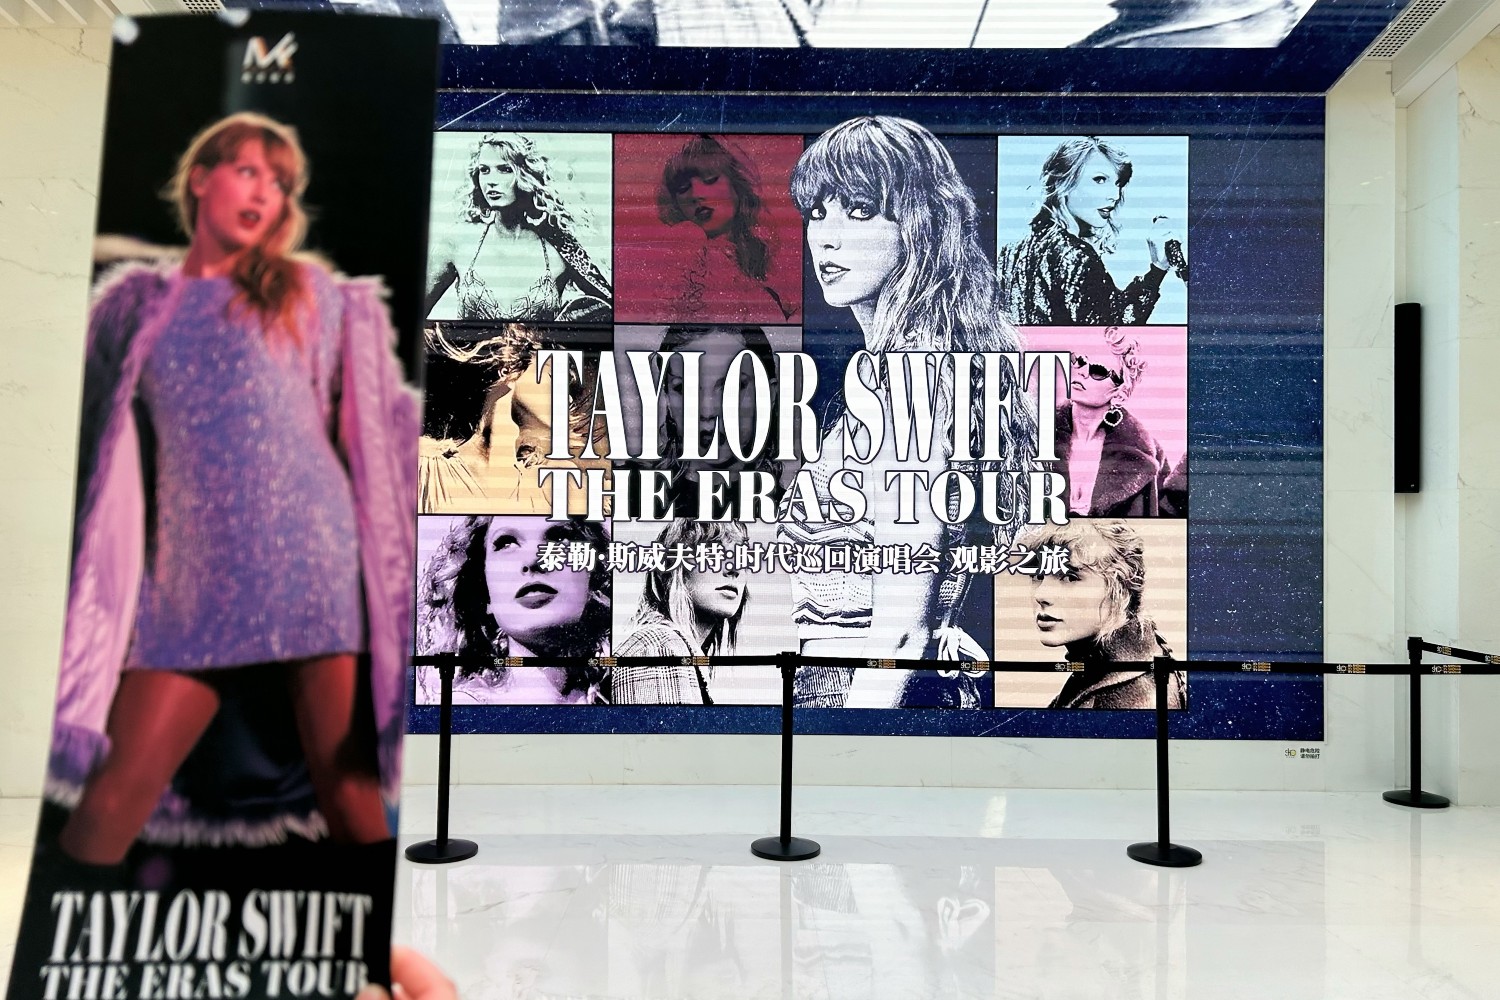 New Taylor Swift Eras Tour Movie Poster, Custom prints store